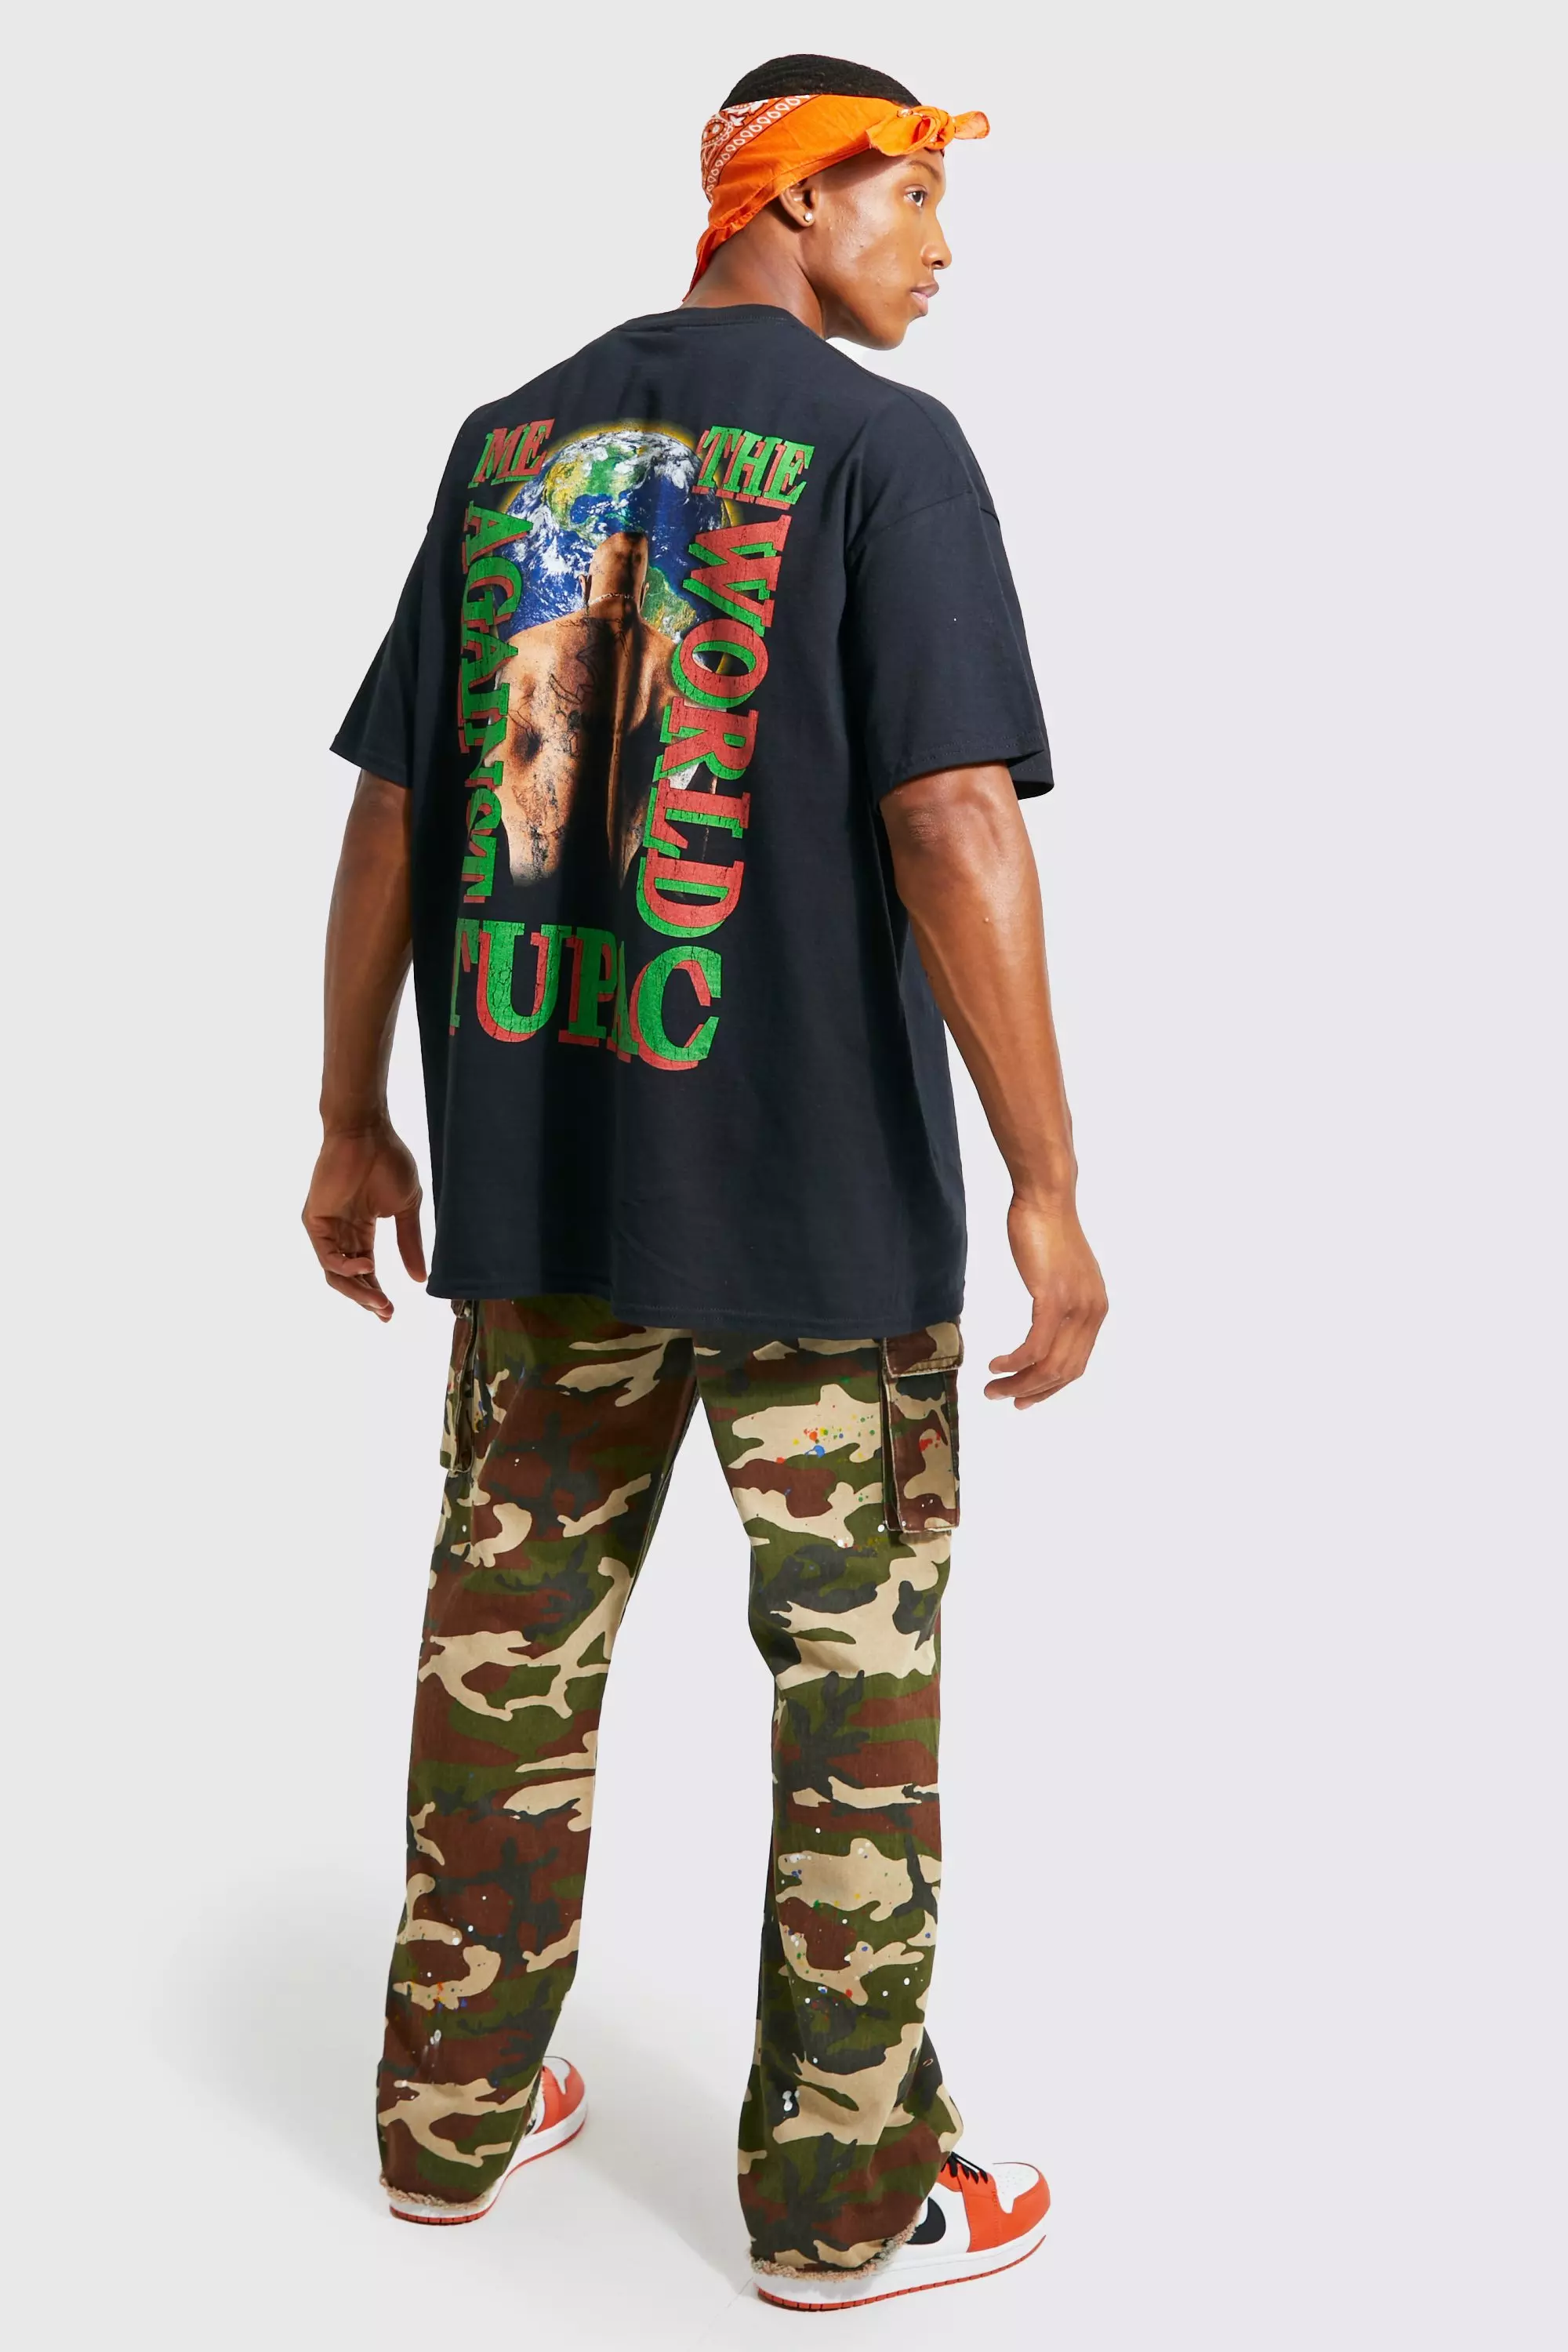 Tupac Shakur Vintage Hip Hop Rap T-Shirt – Agent Thrift